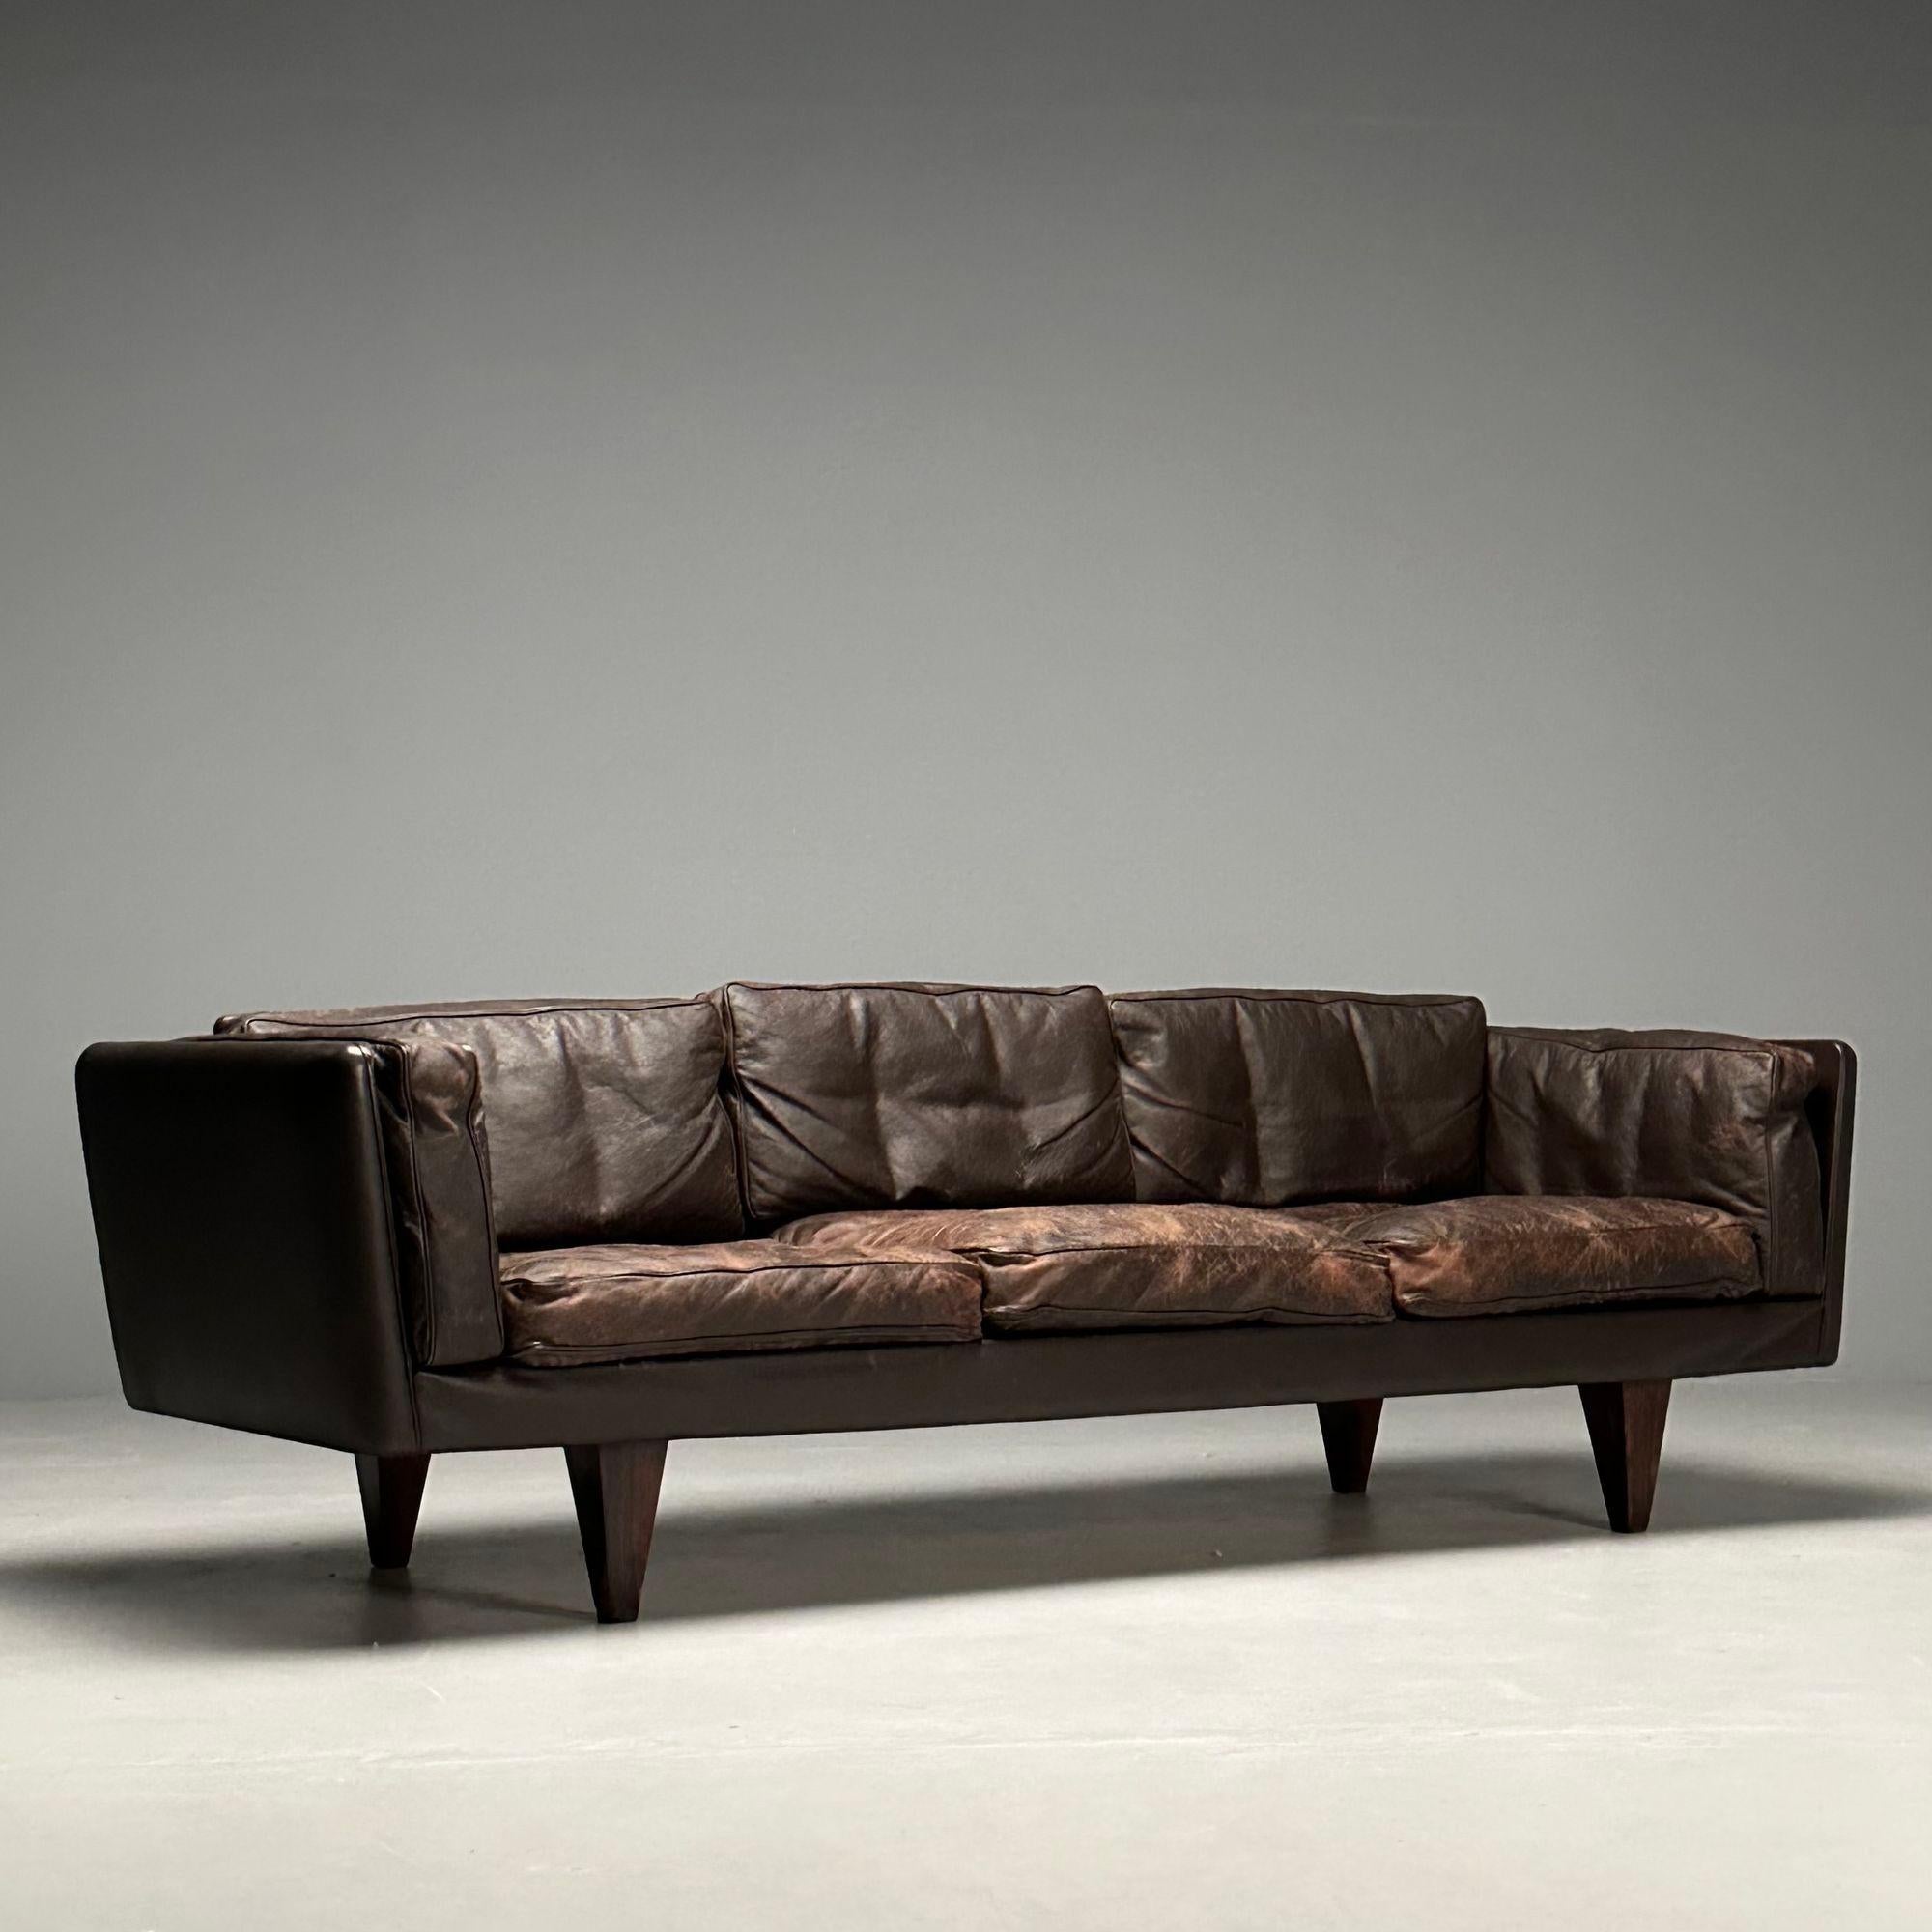 Swedish Illum Wikkelsö, Danish Mid-Century Modern Sofa, Distressed Brown Leather, 1960s